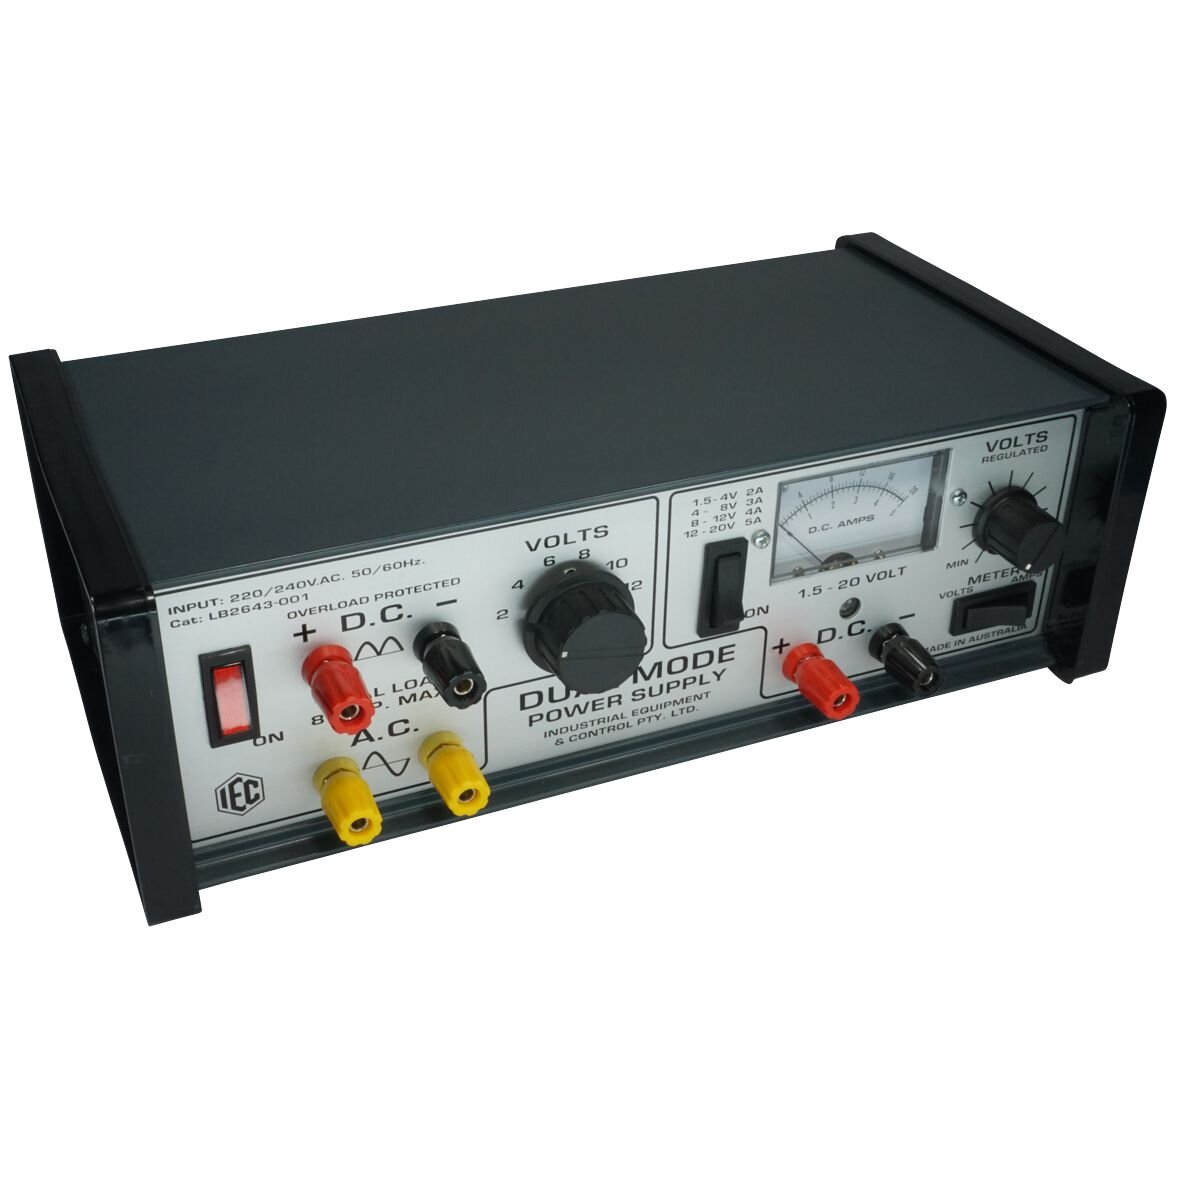 LB2643-001 Power Supply Var. Dual Mode Reg & SW V A Meter.jpg